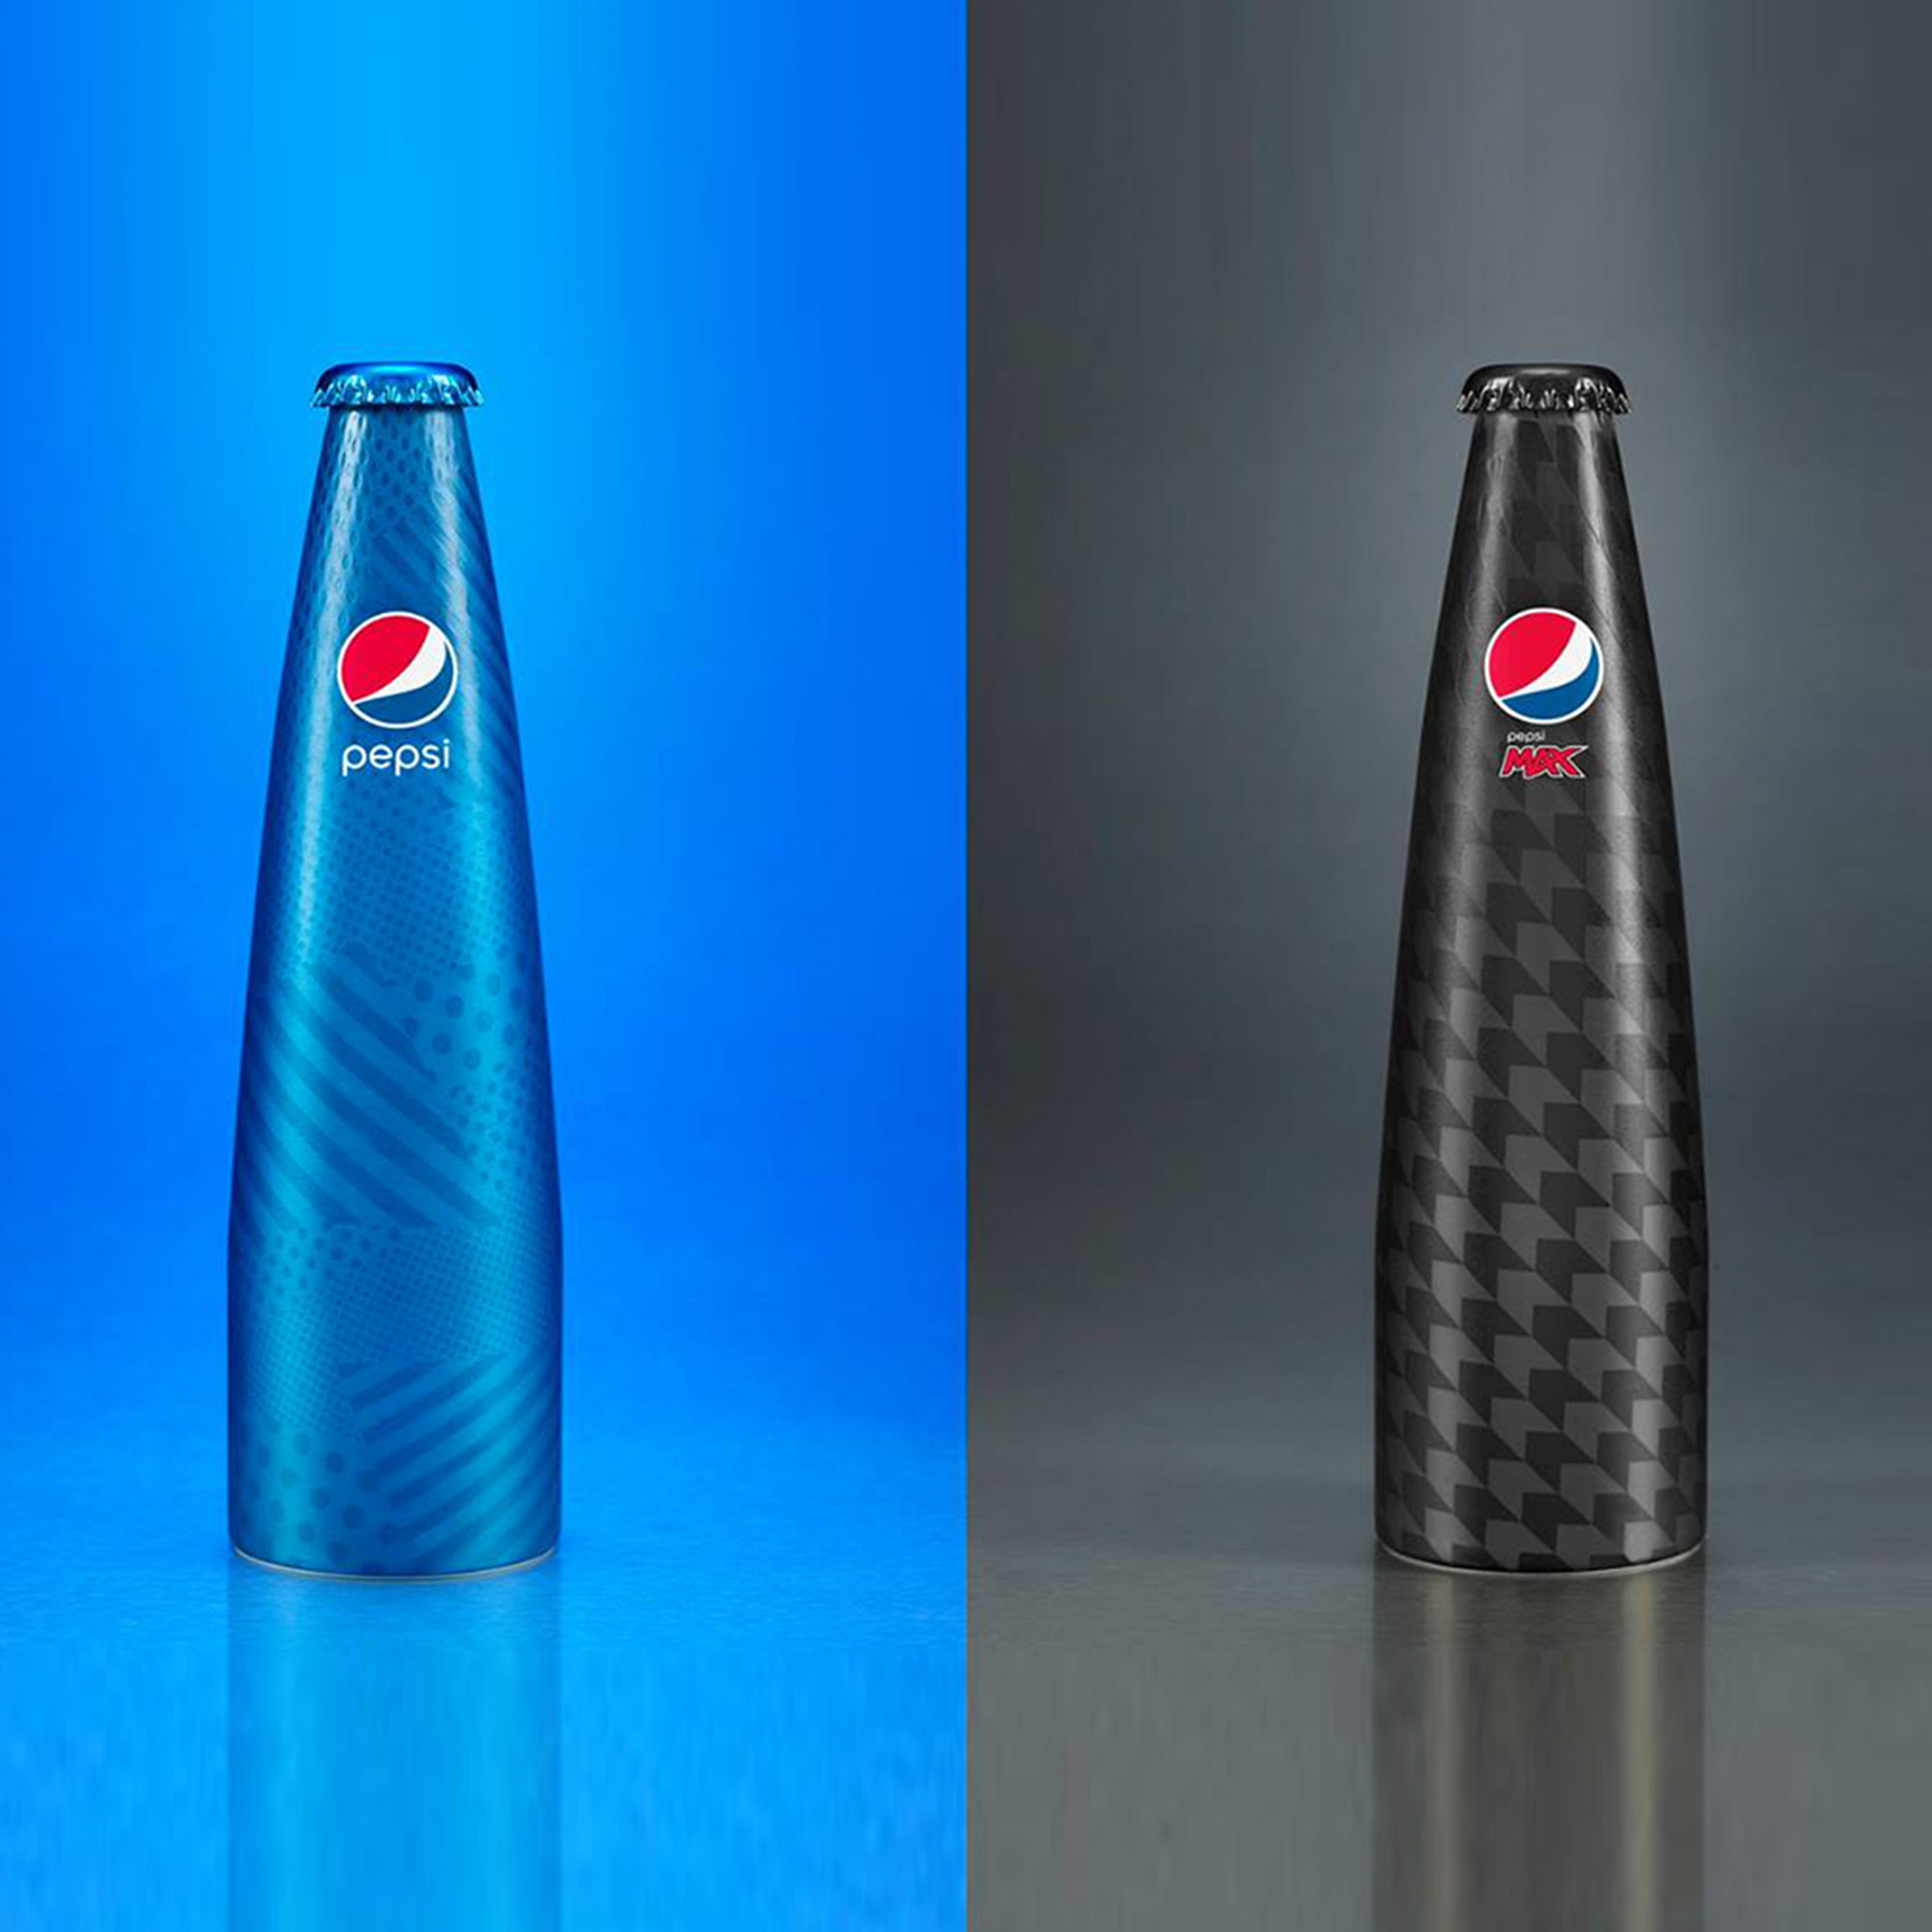 Pepsi premium' bottle, Karim Rashid for Mix it up Pepsi